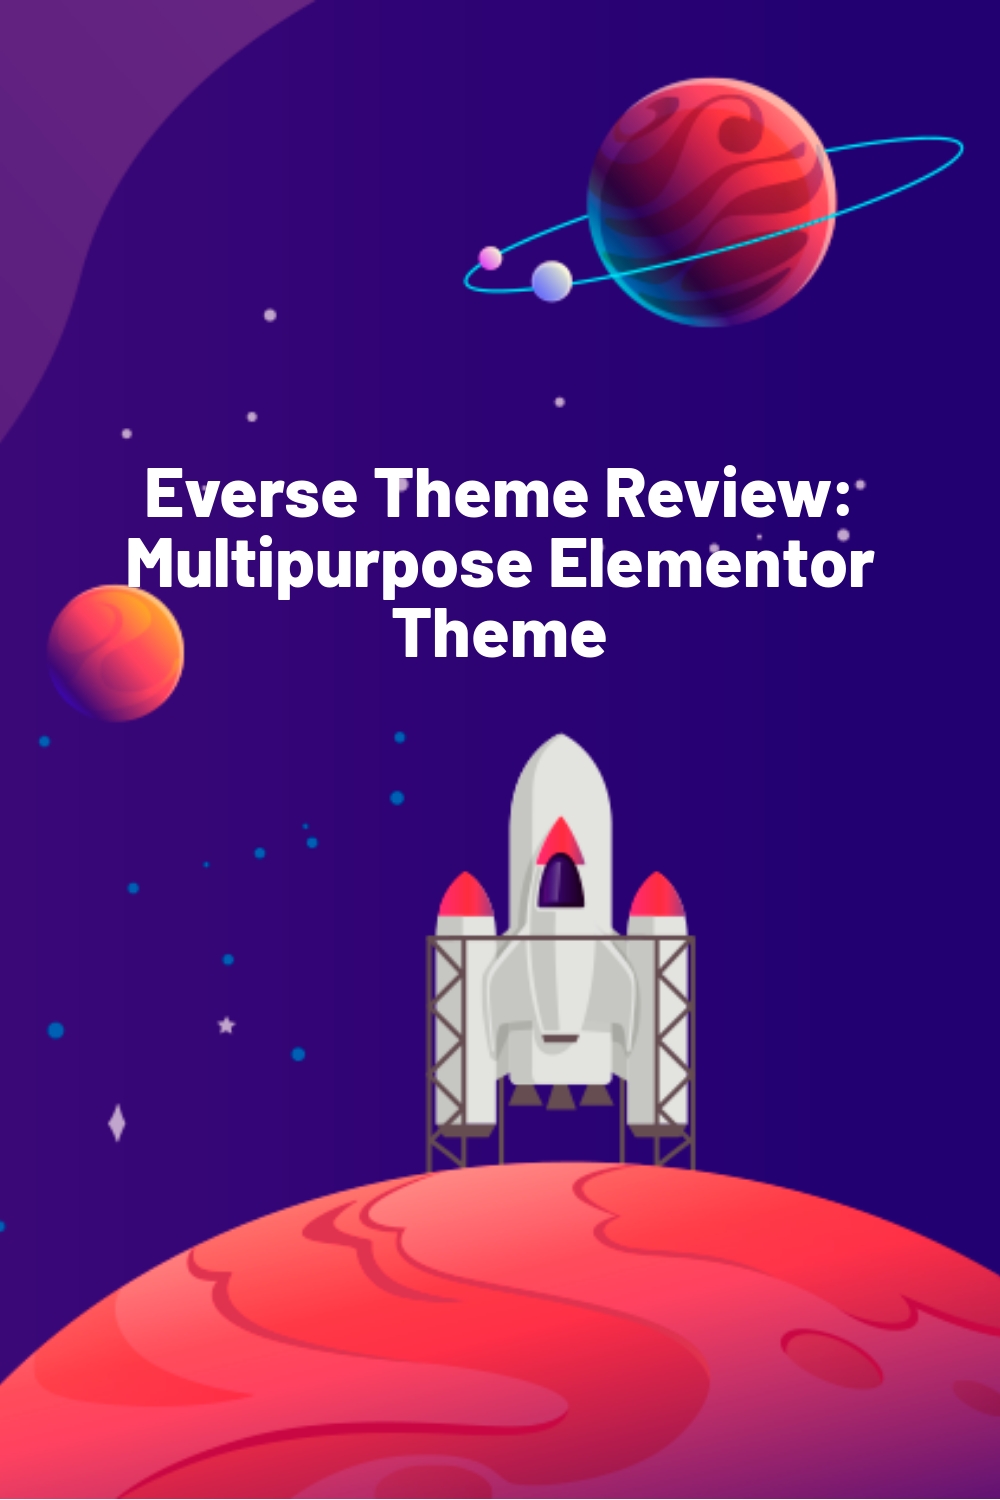 Everse Theme Review: Multipurpose Elementor Theme